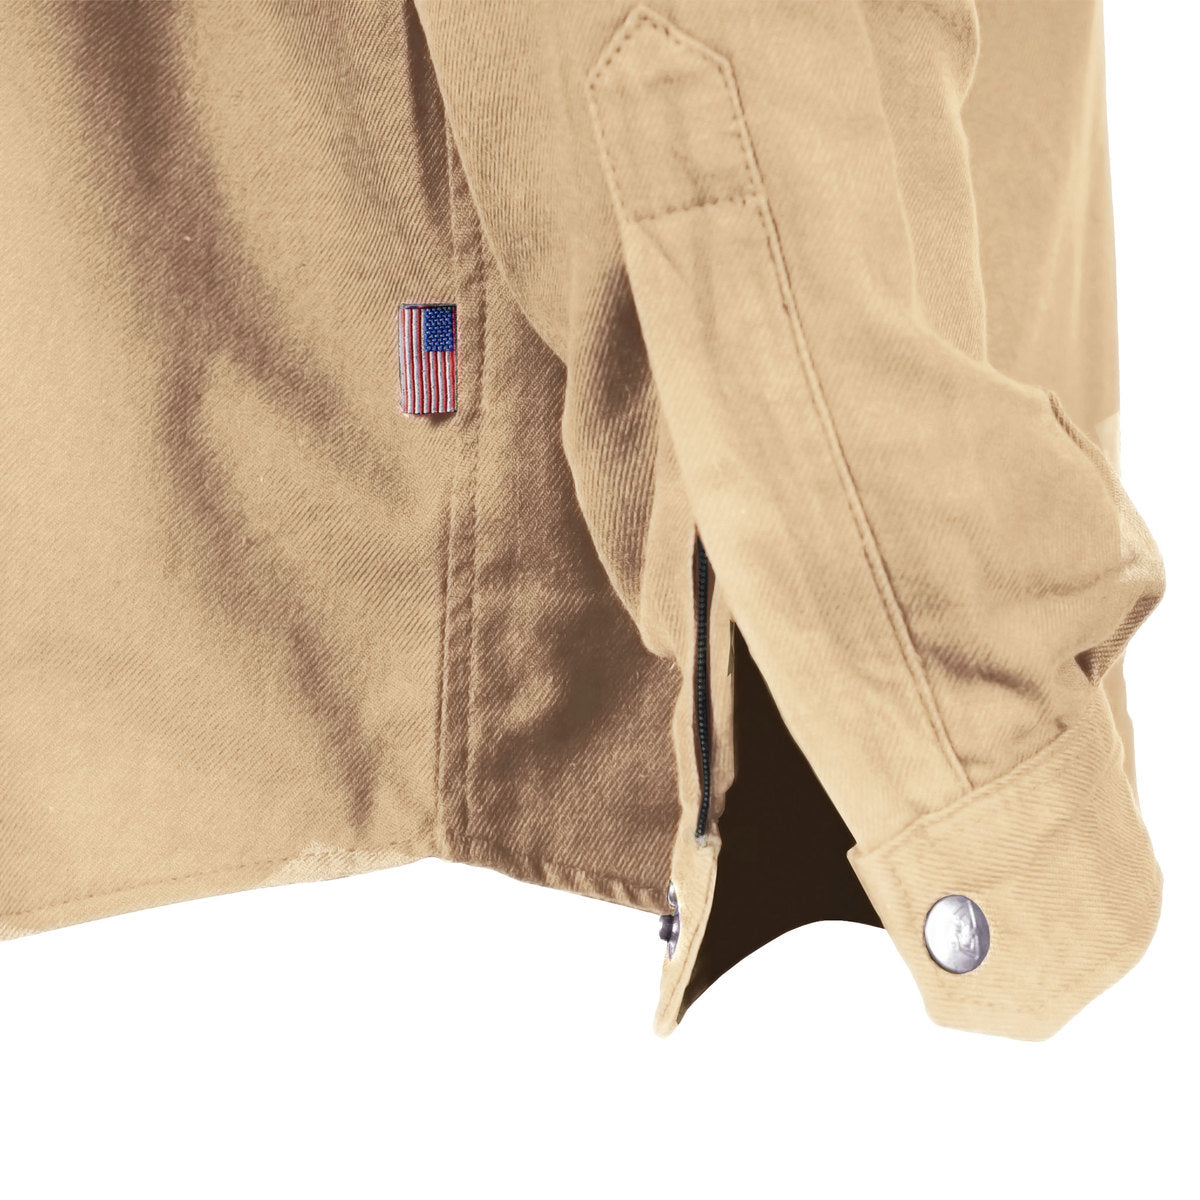 Protective Flannel Shirt - Khaki Solid